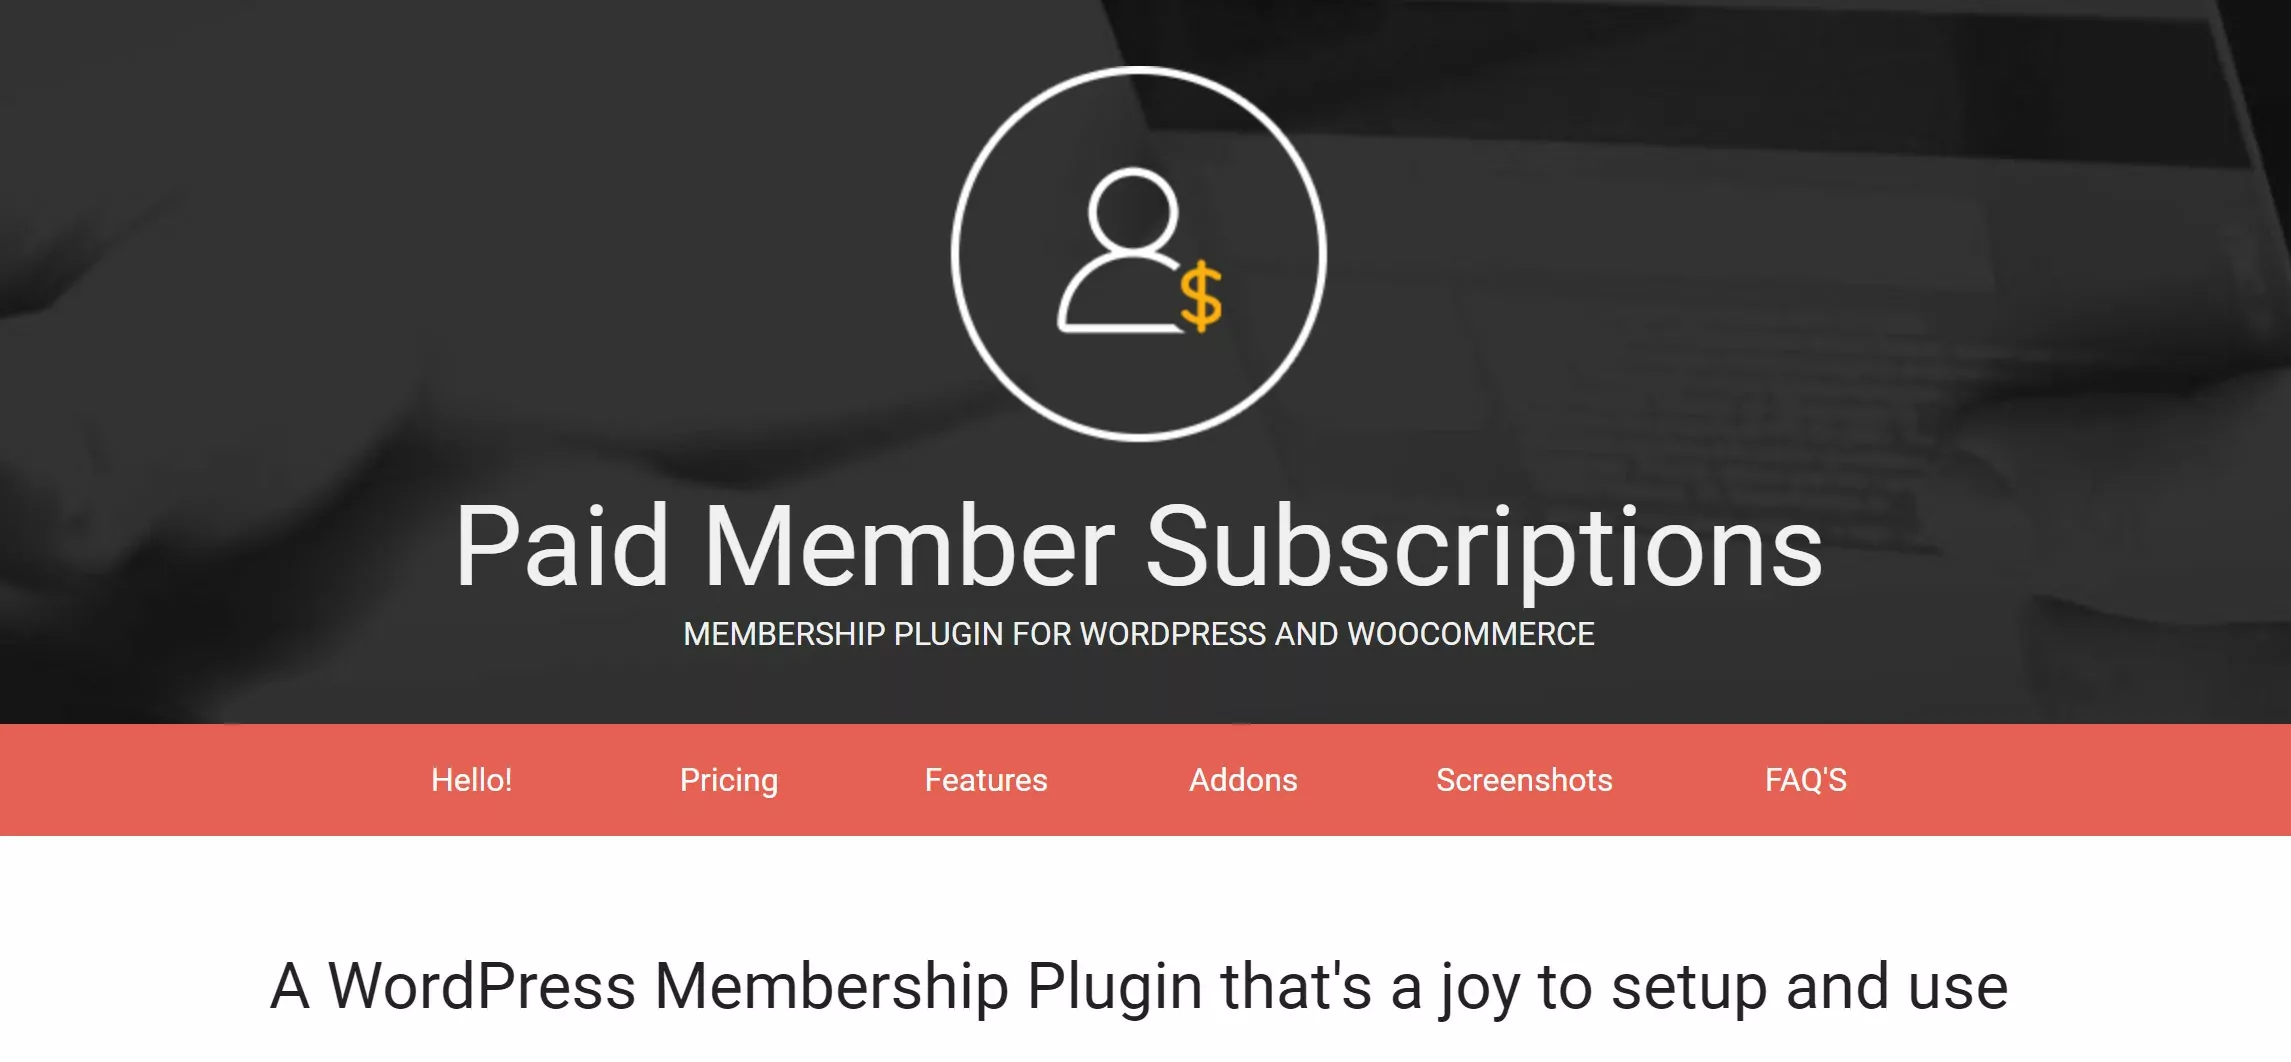 Paid Member Subscriptions might be the best WordPress membership plugin